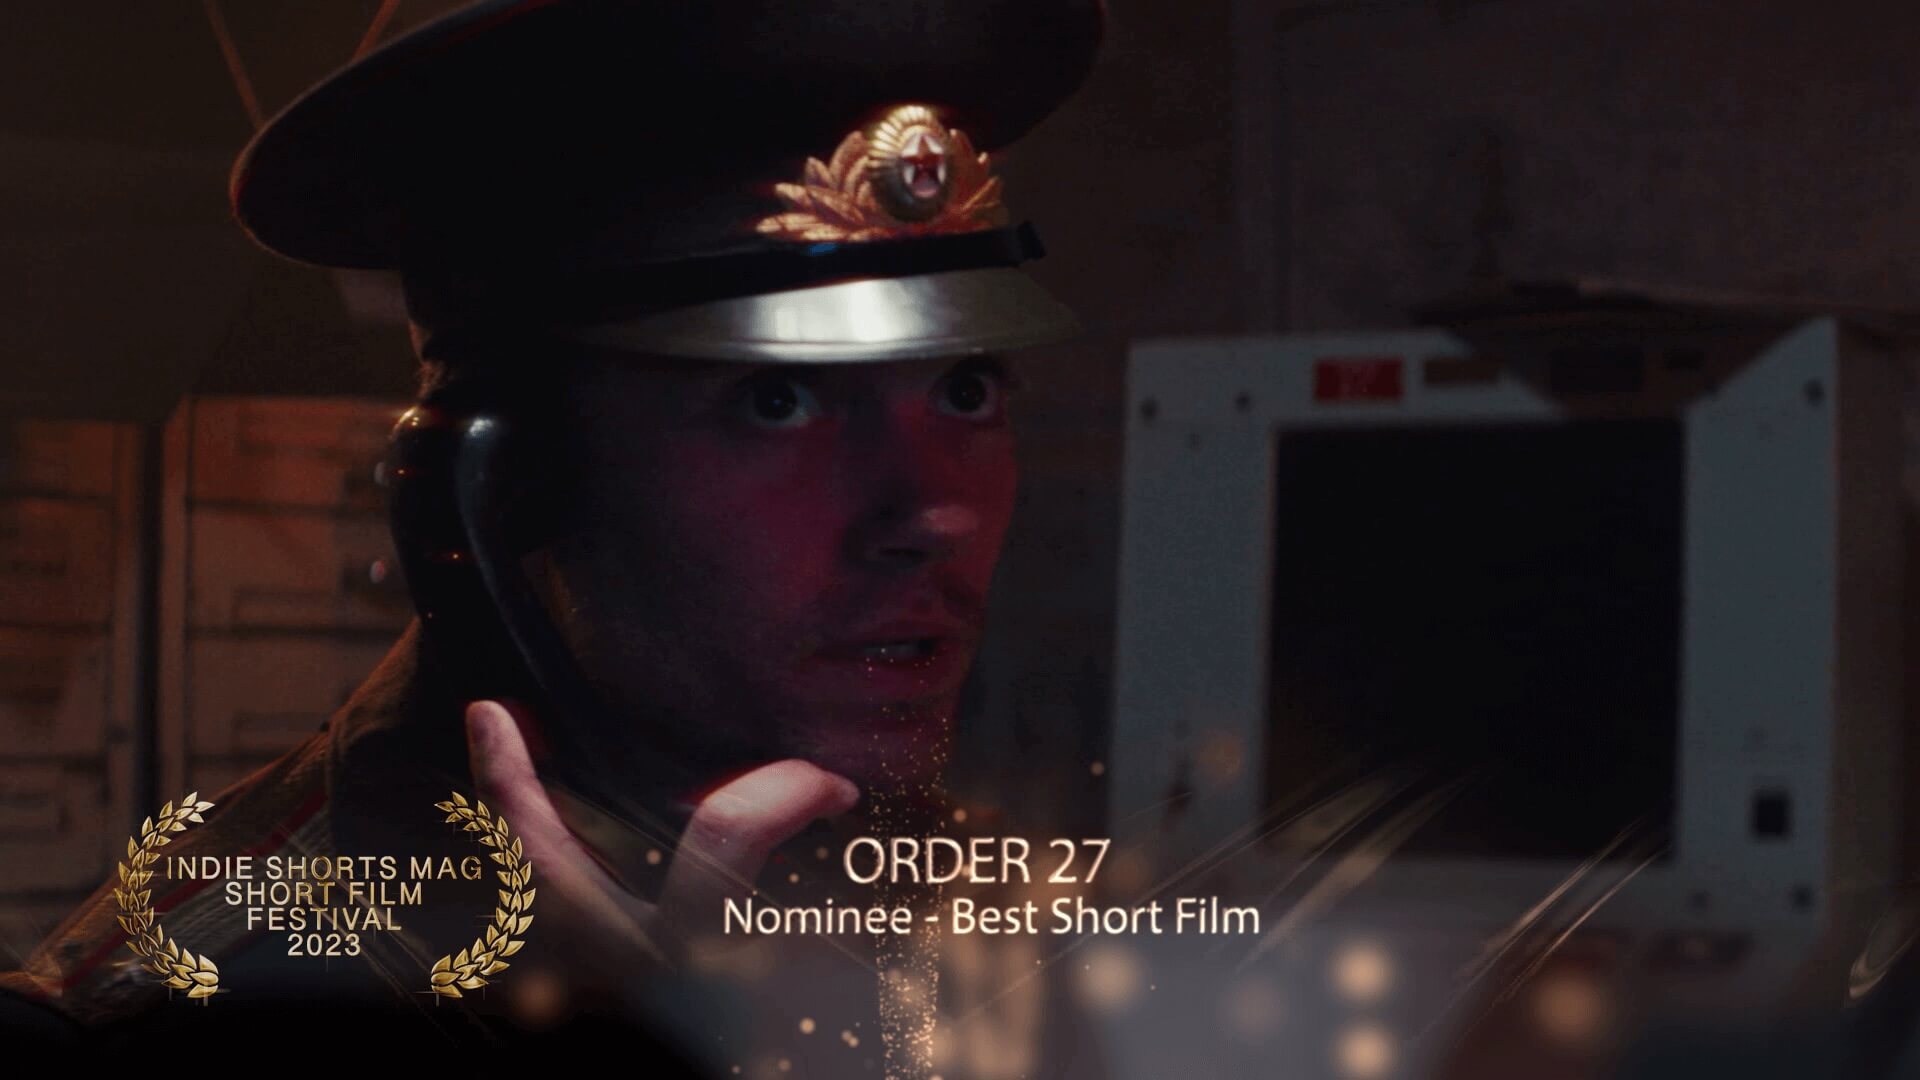 Indie Shorts Mag Short Film Festival - Best Short Film - Nominee - Order 27